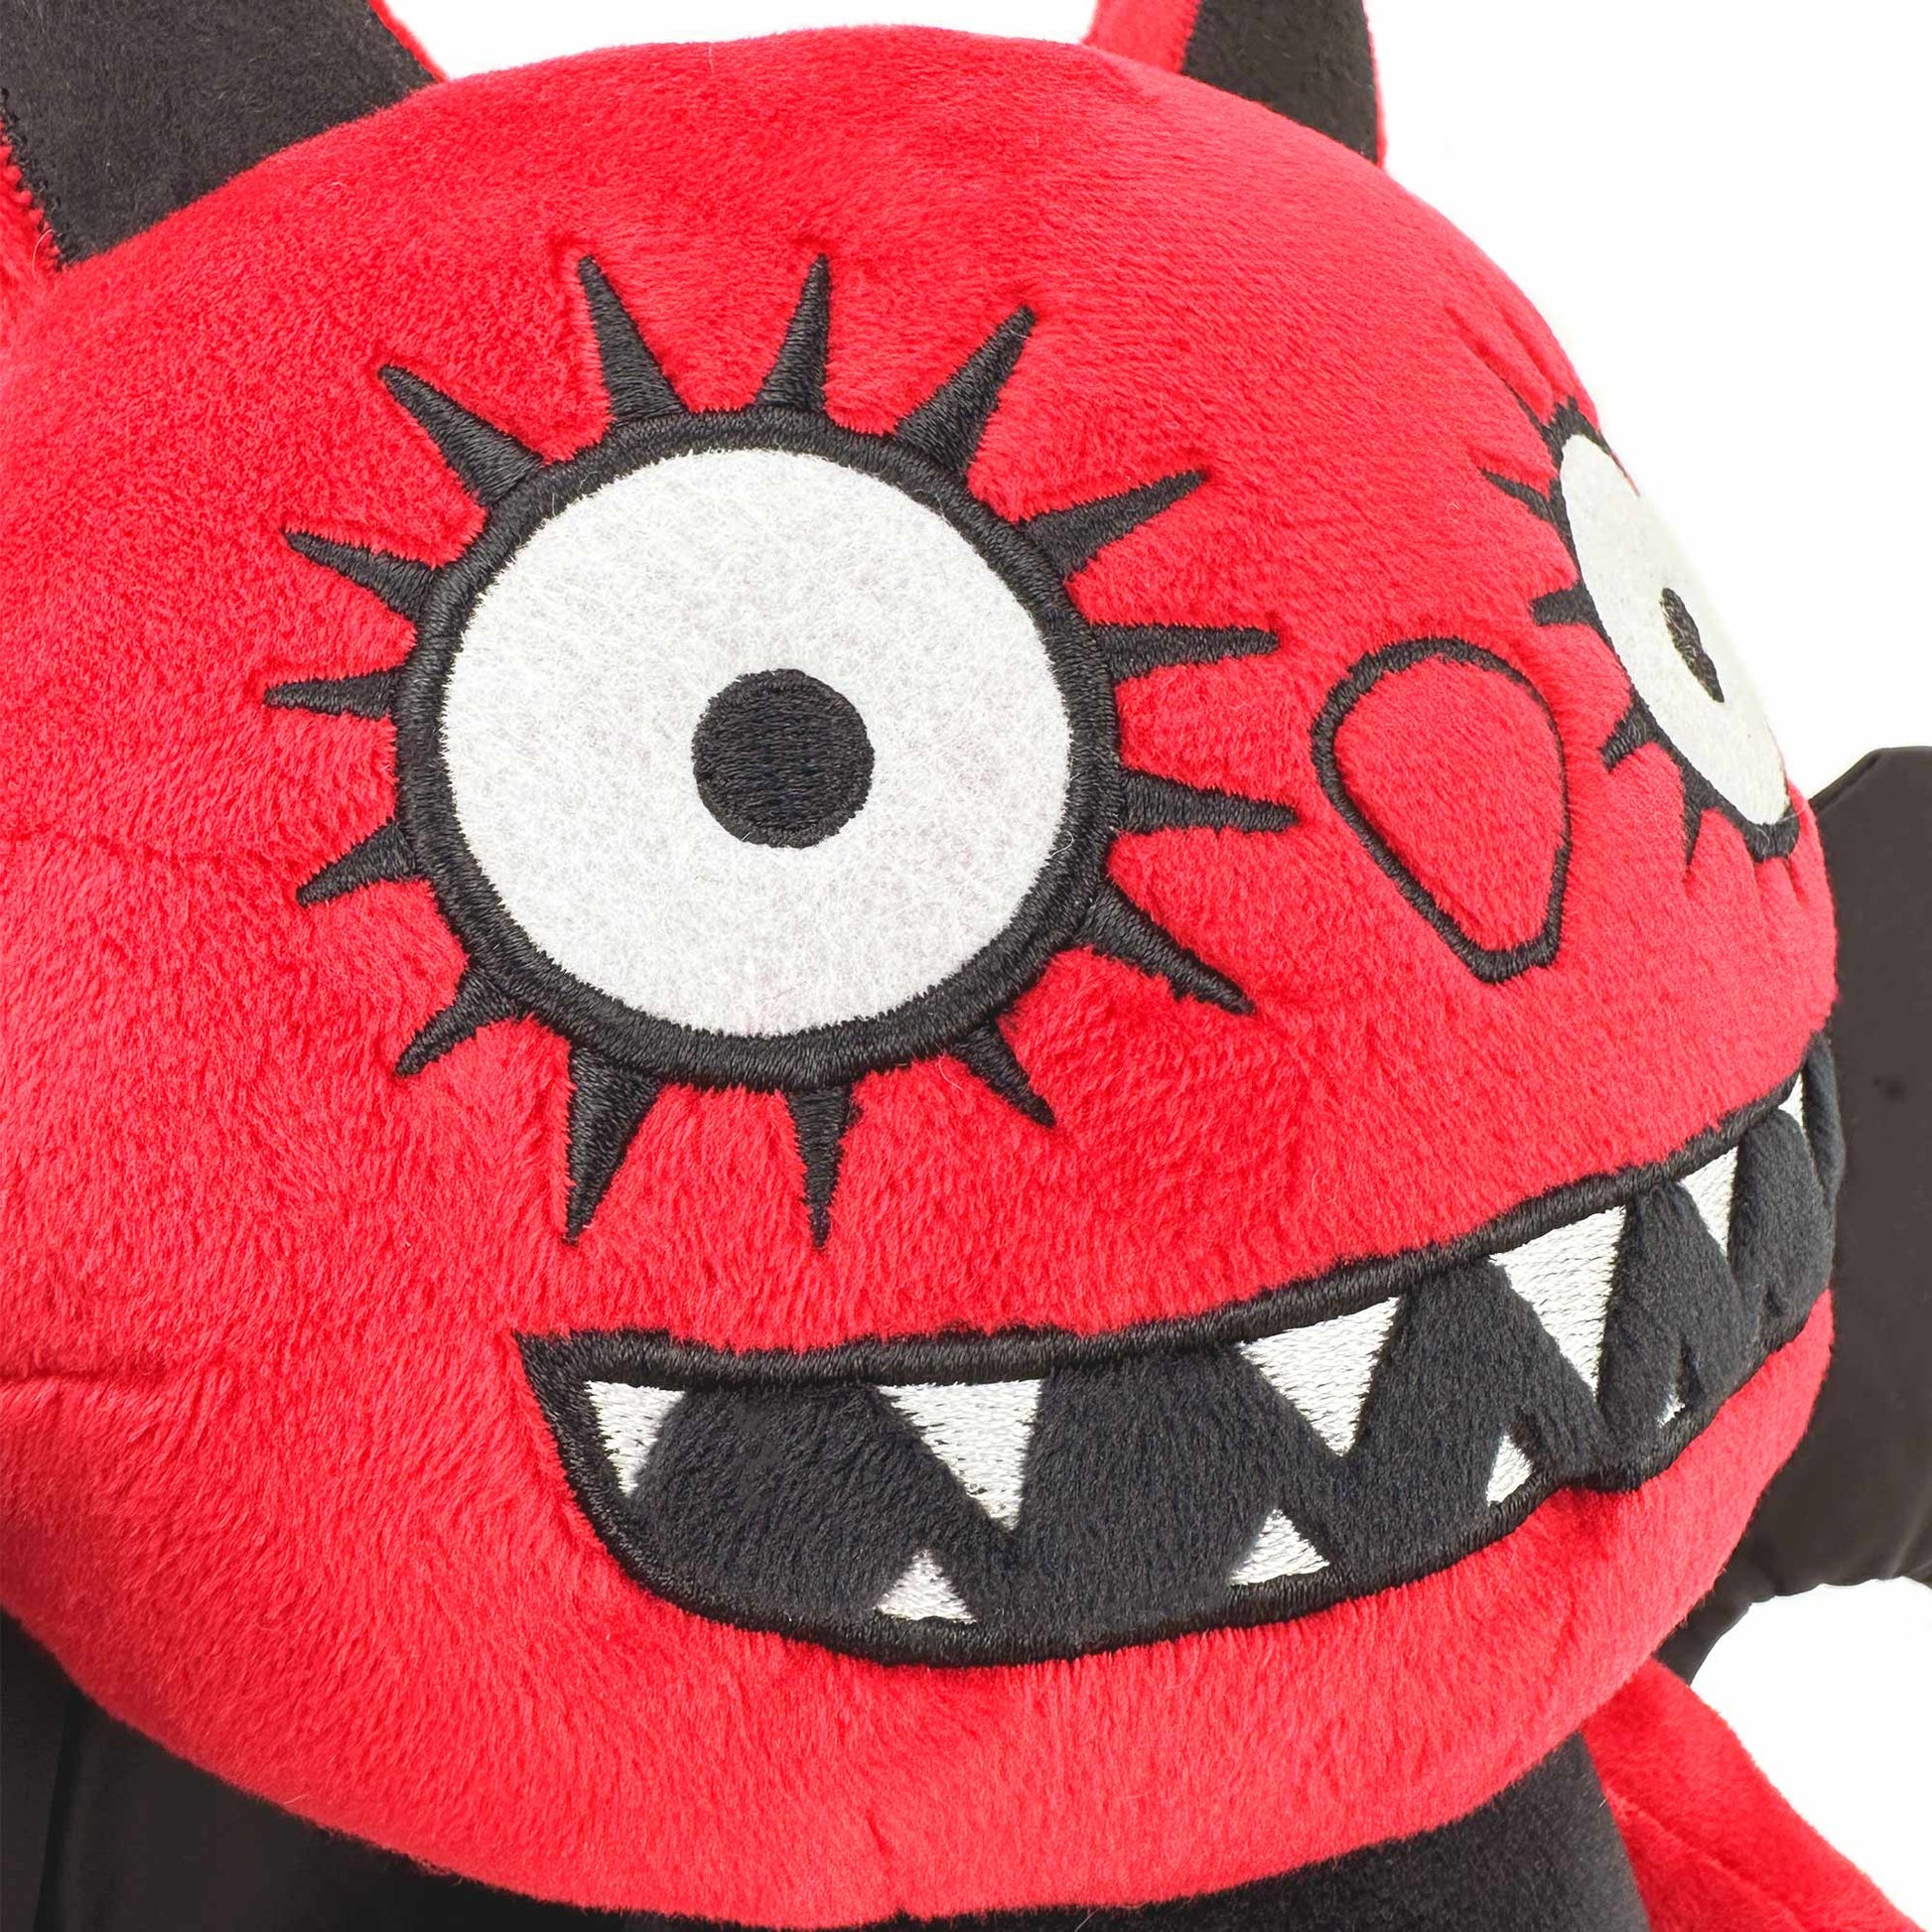 red drogon stuffed animal detail